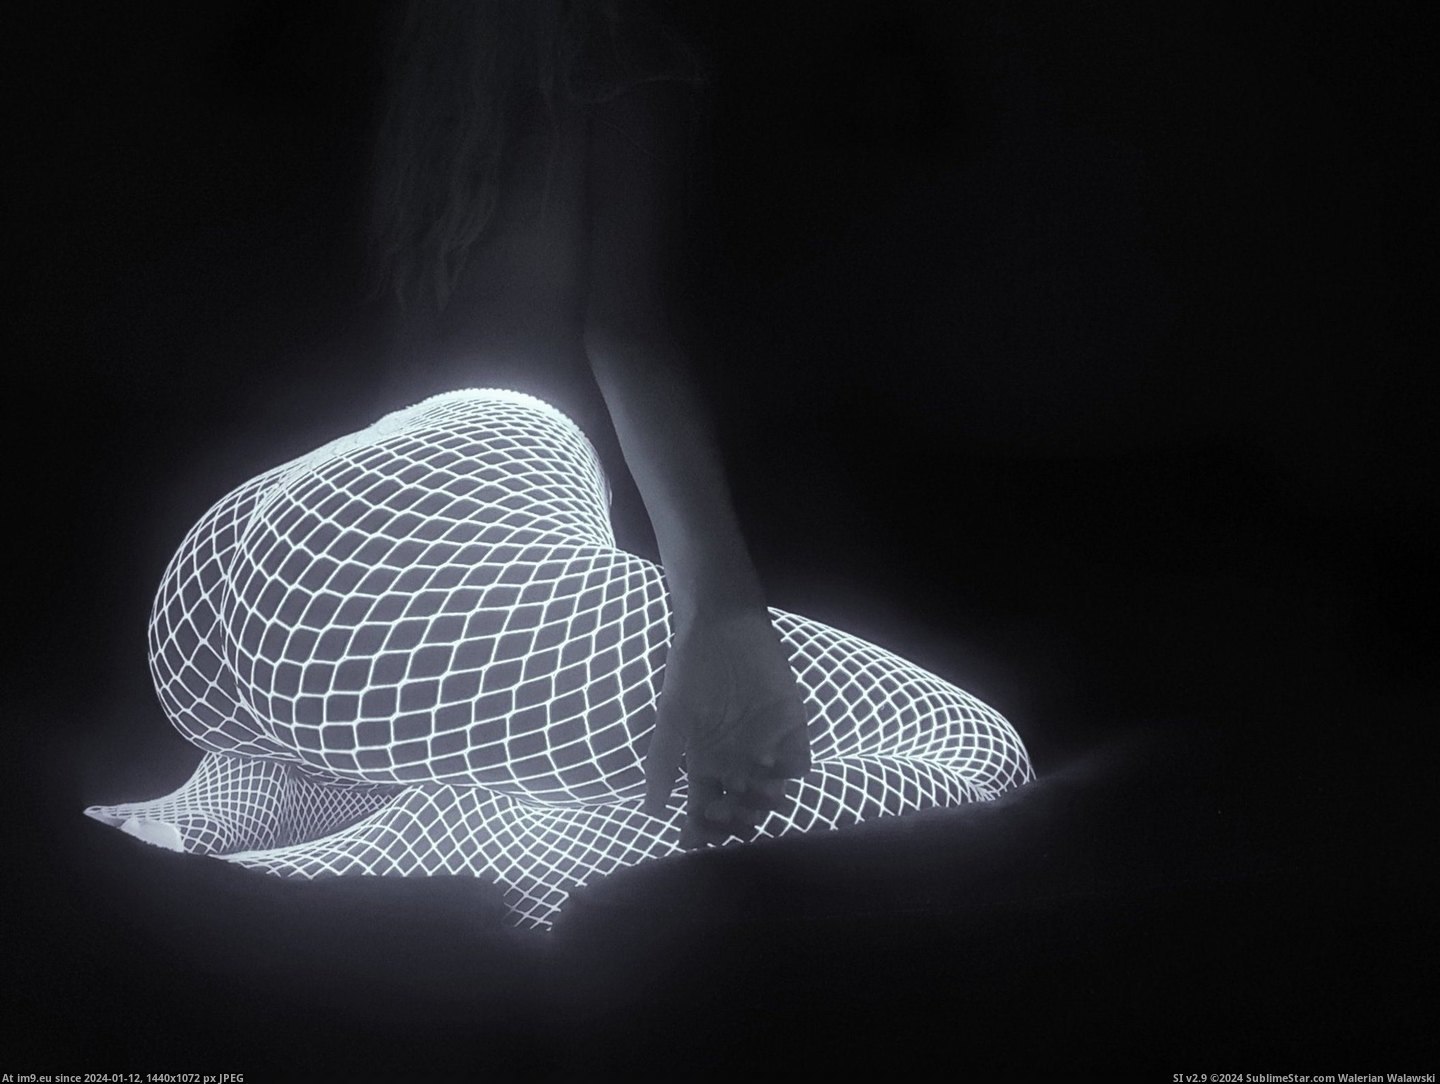 #Nsfw #Dark #Glow #Stockings #Fishnet [Nsfw] Glow-In-The-Dark Fishnet Stockings Pic. (Obraz z album My r/NSFW favs))